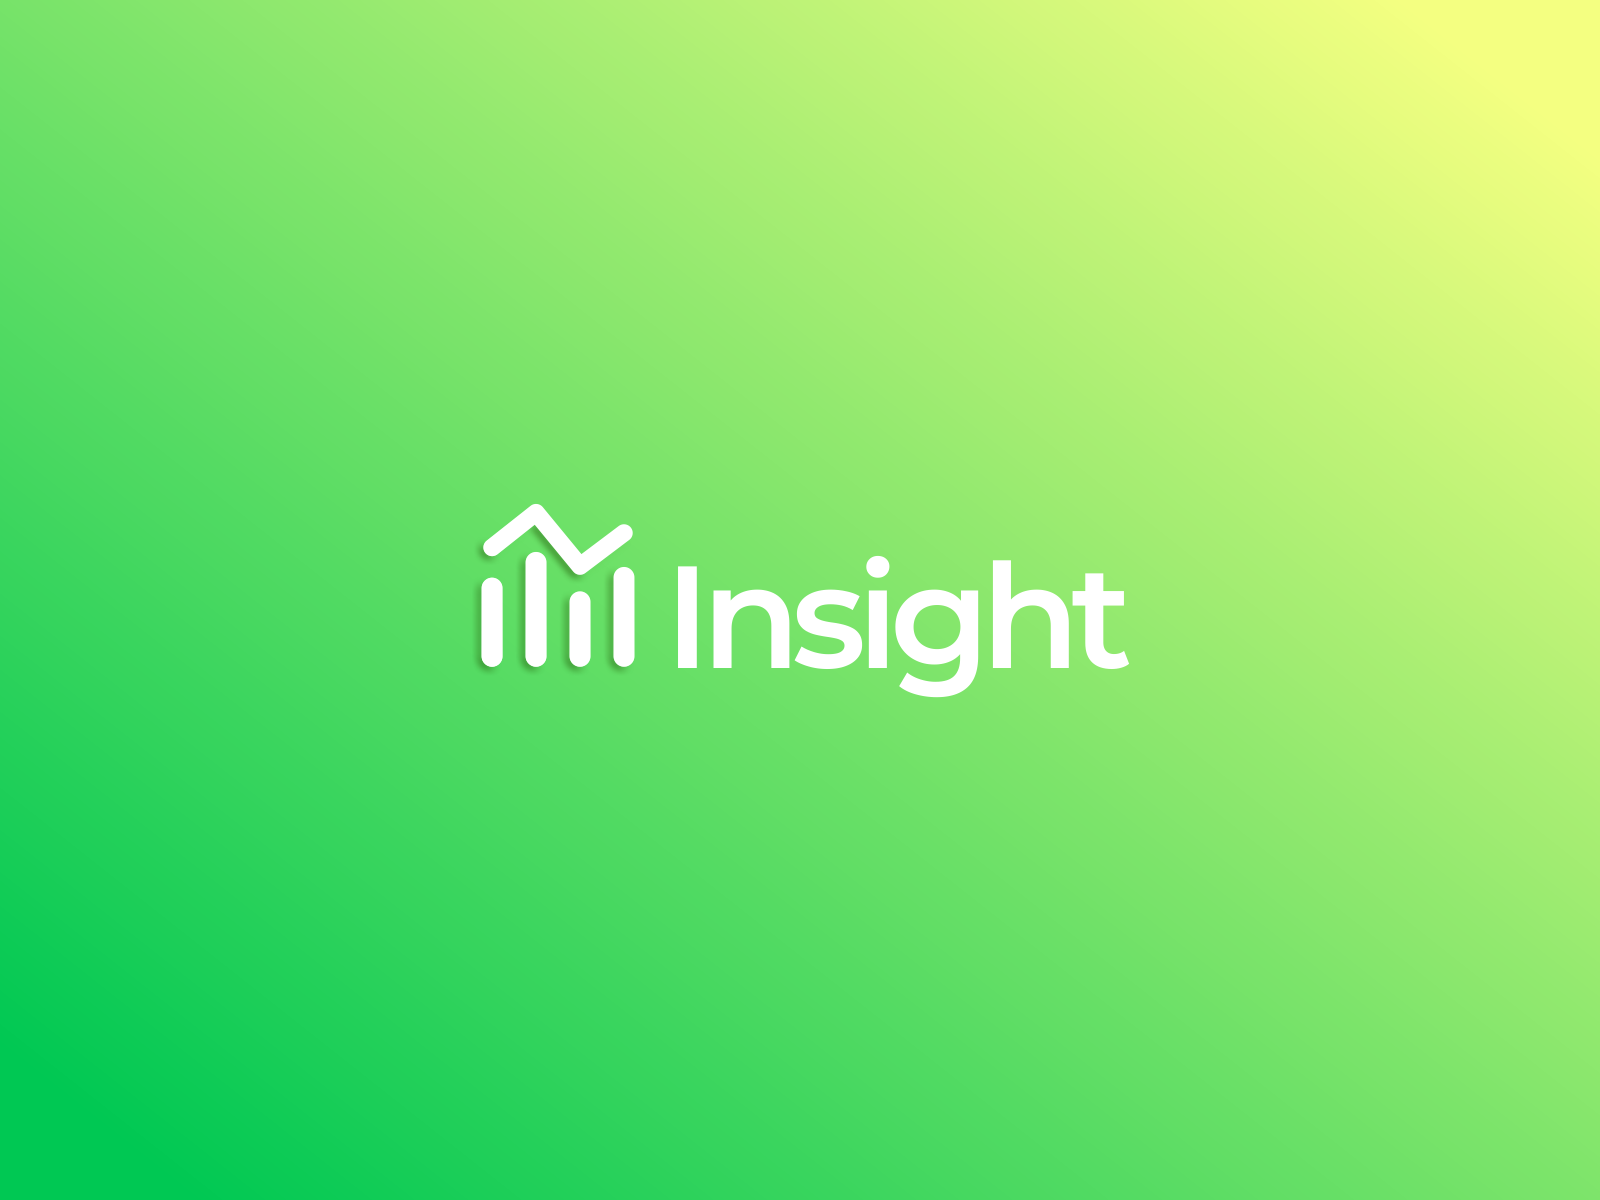 Insight logo by Adeline Studio on Dribbble